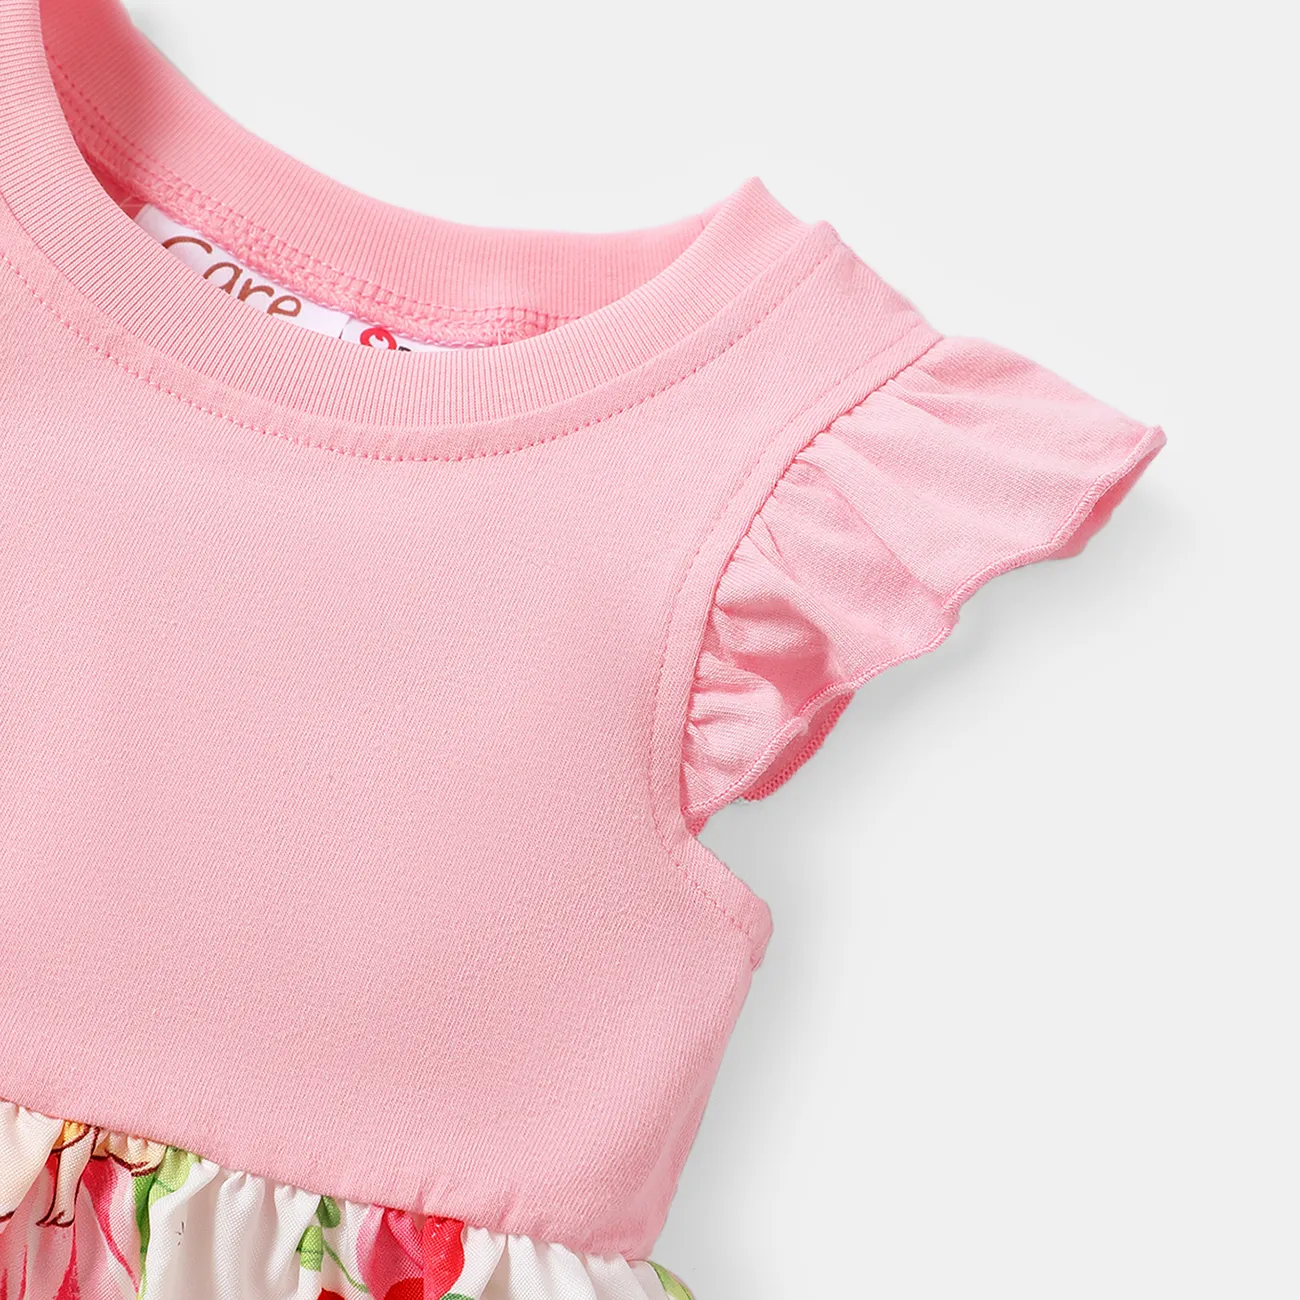 Care Bears 2pcs Baby Girl Solid & Print Spliced Flutter-sleeve Dress with Crossbody Bag Set Pink big image 1